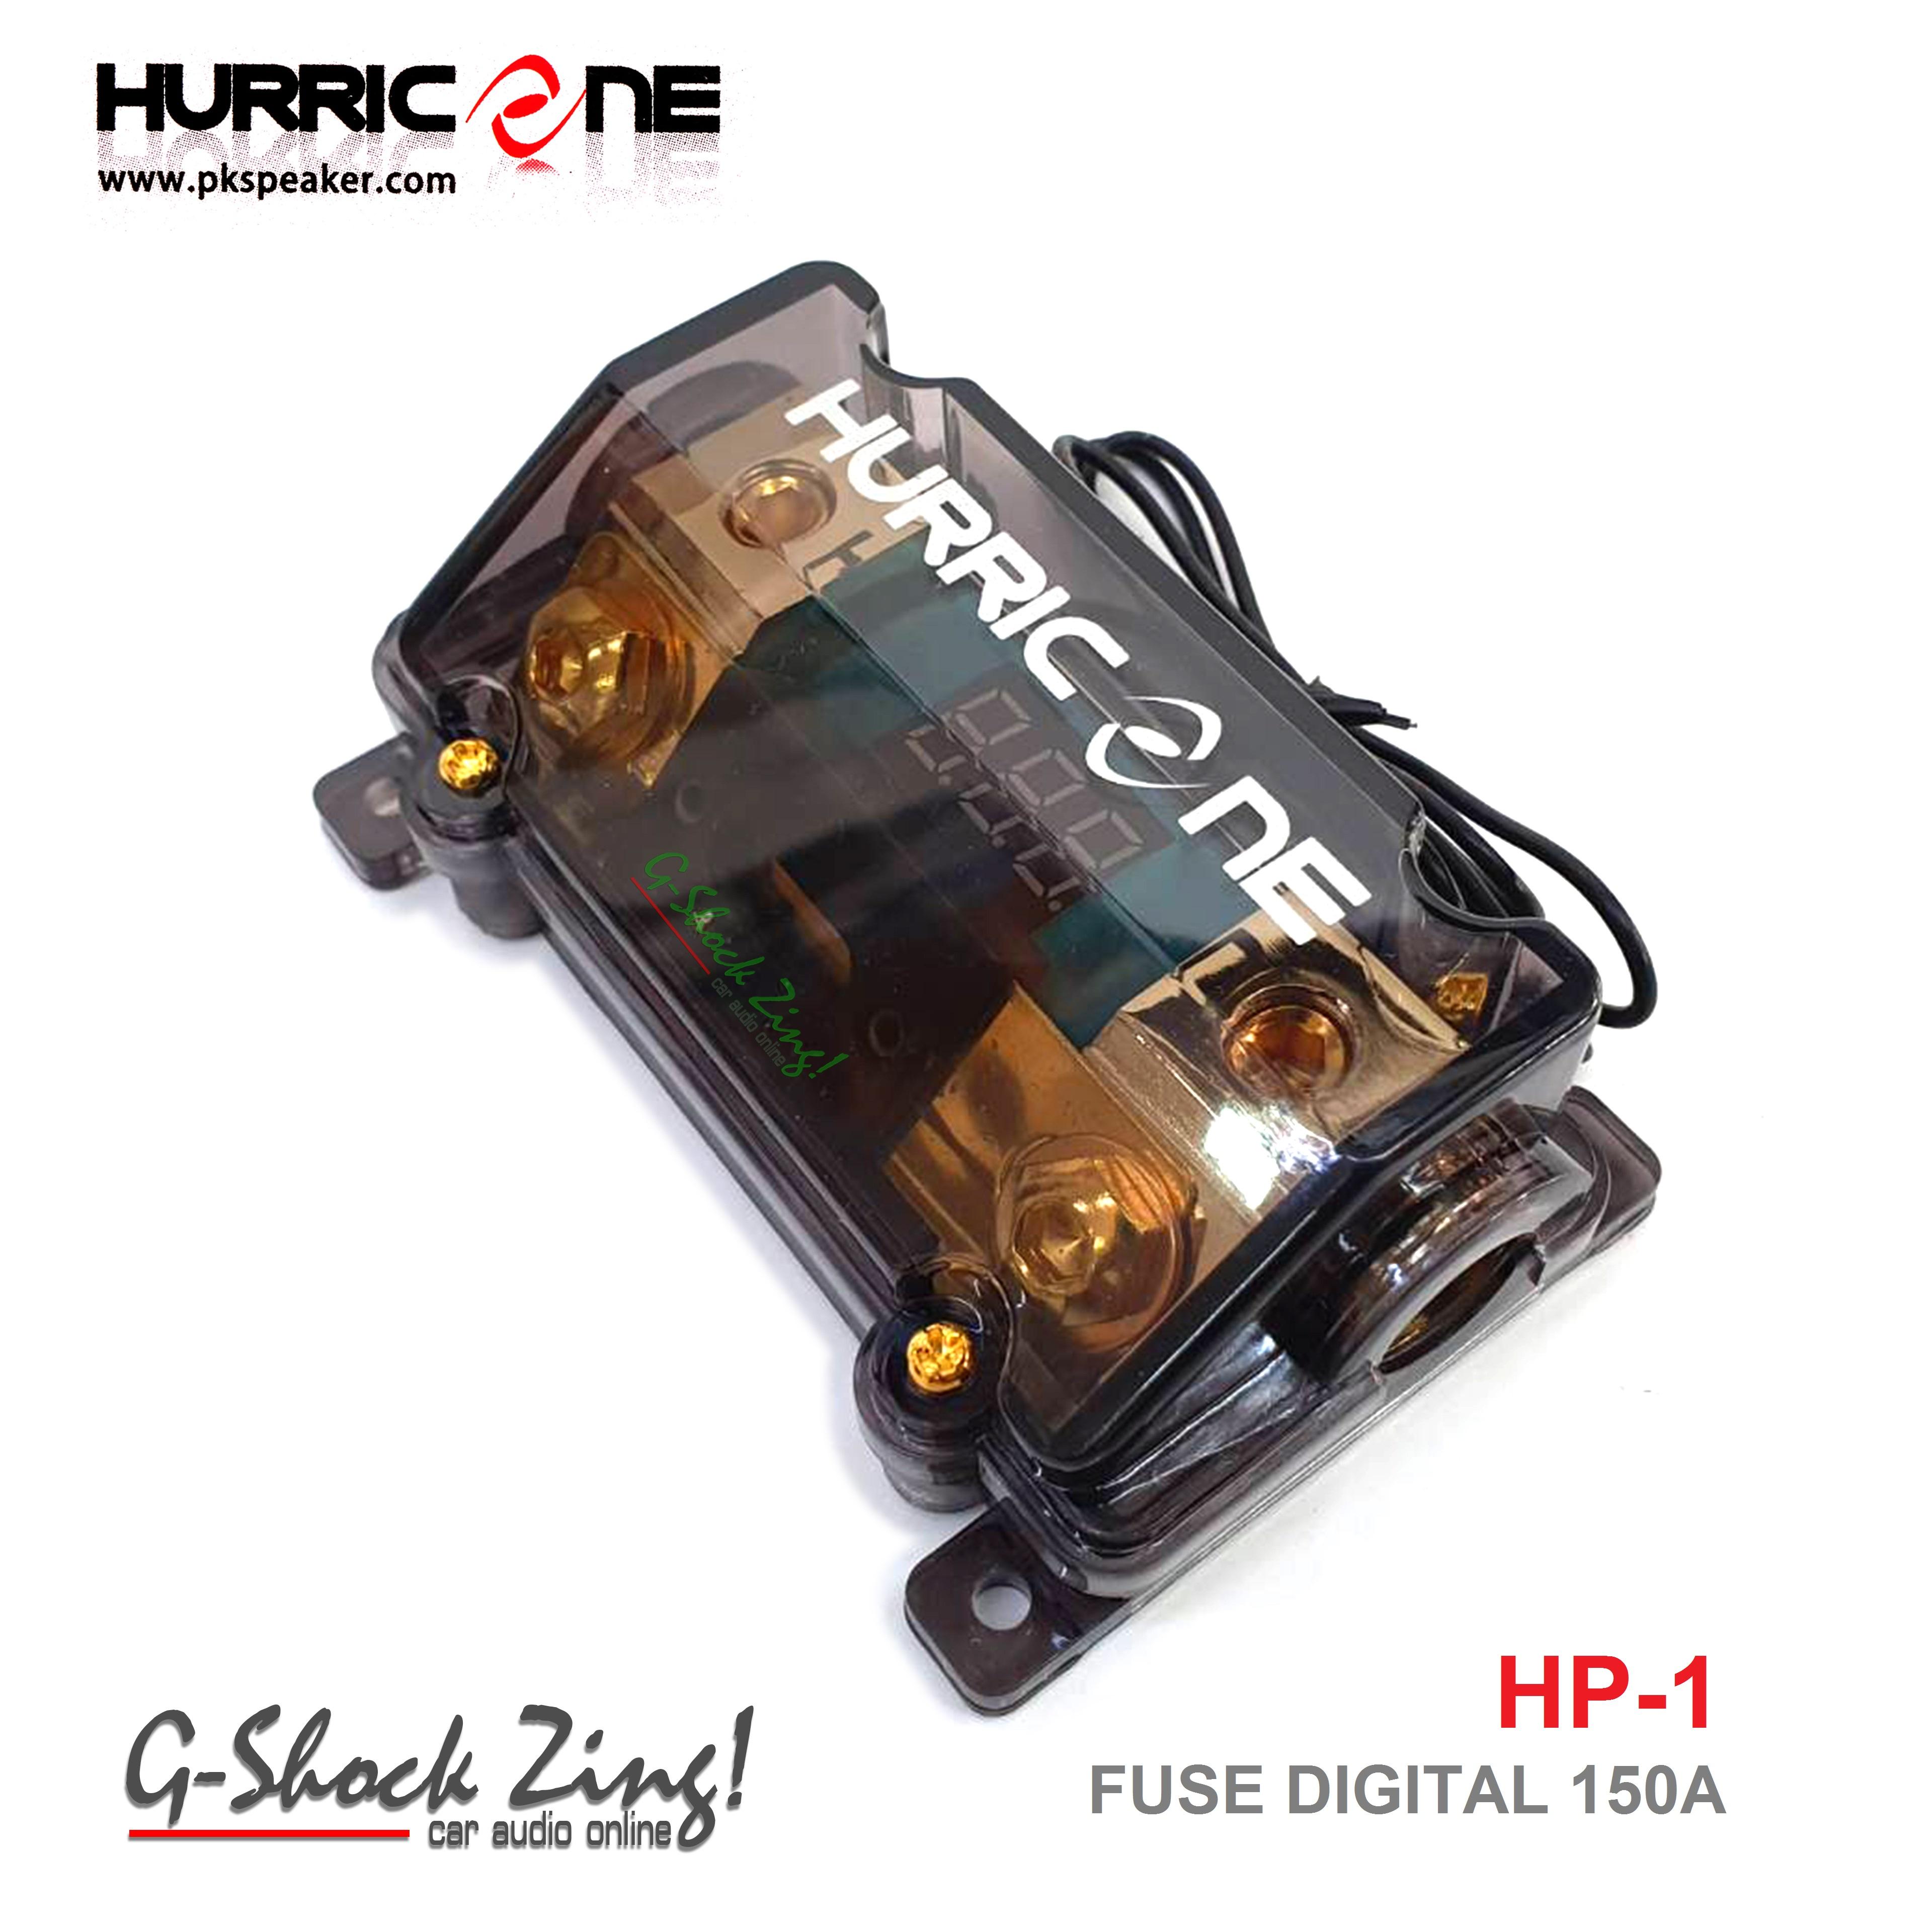 HURRICANE FUSE ฟิวส์รถยนต์ เครื่องเสียงรถยนต์ กล่องฟิวส์ แบบจอดิจิตอล บอกโวลต์ (เข้า 1ออก 1) 150A Hurrican HP-1 =1ตัว